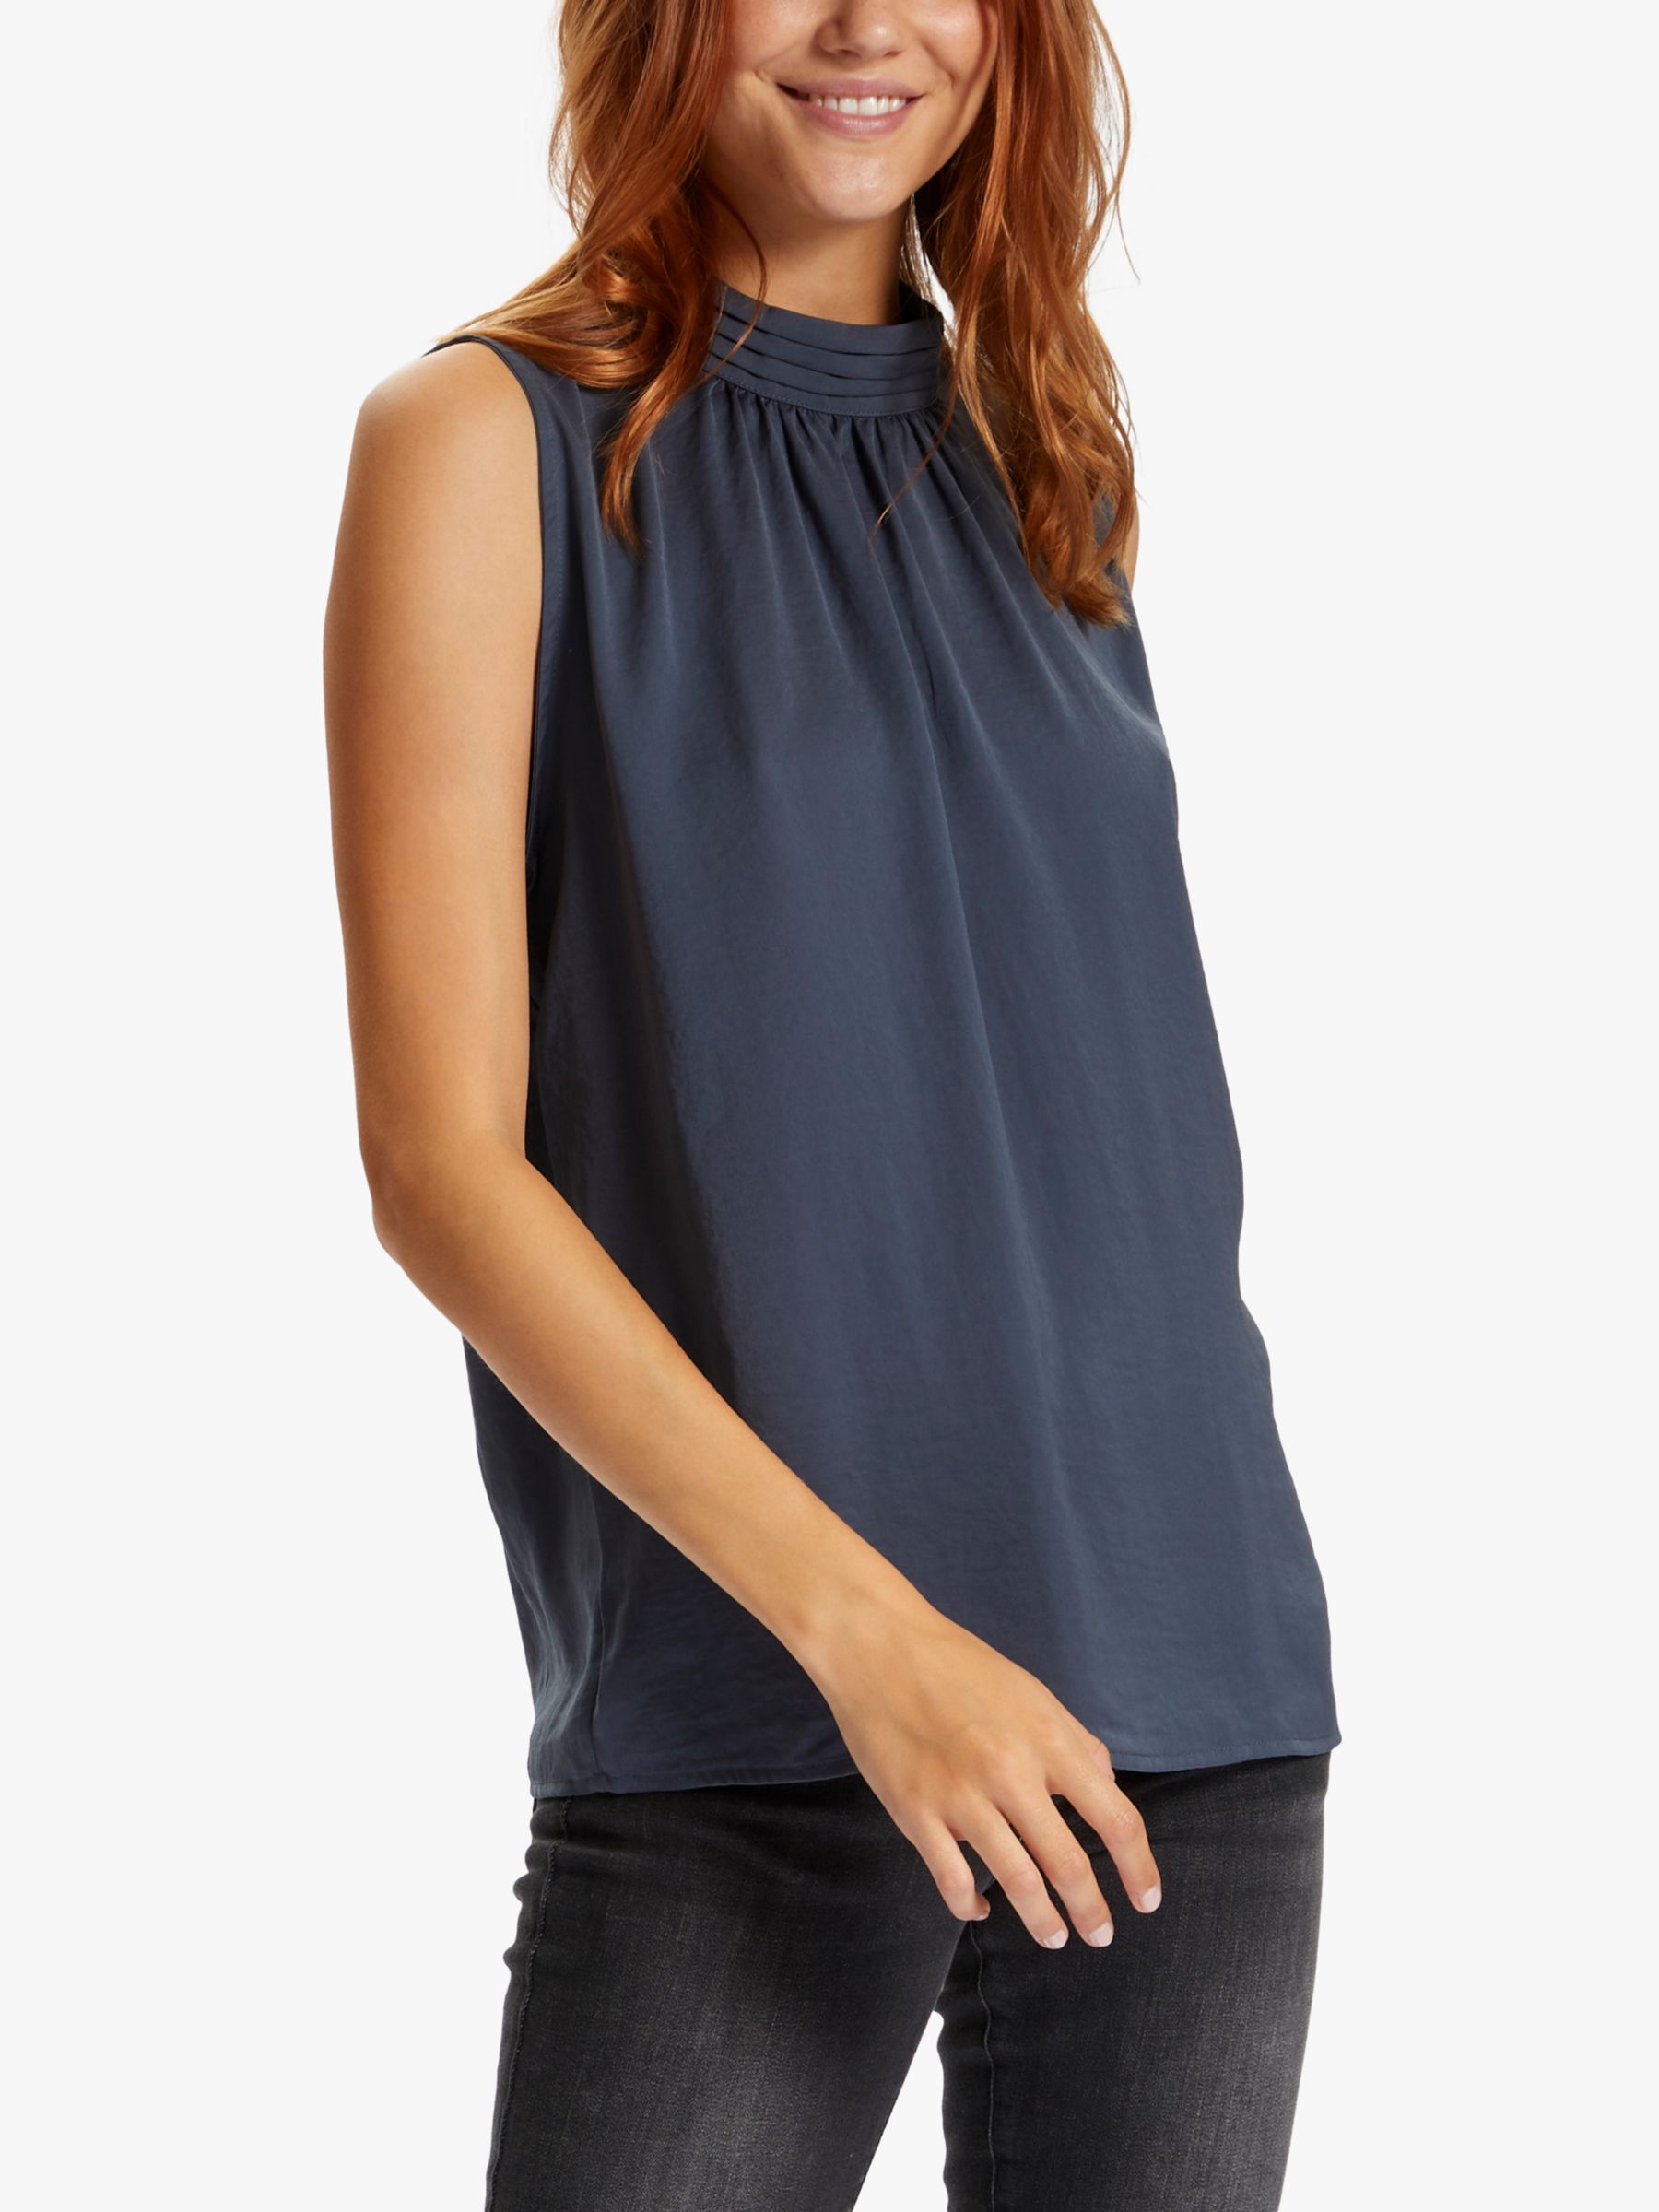 Women's Shirts & Tops - High Neck, Sleeve: Sleeveless